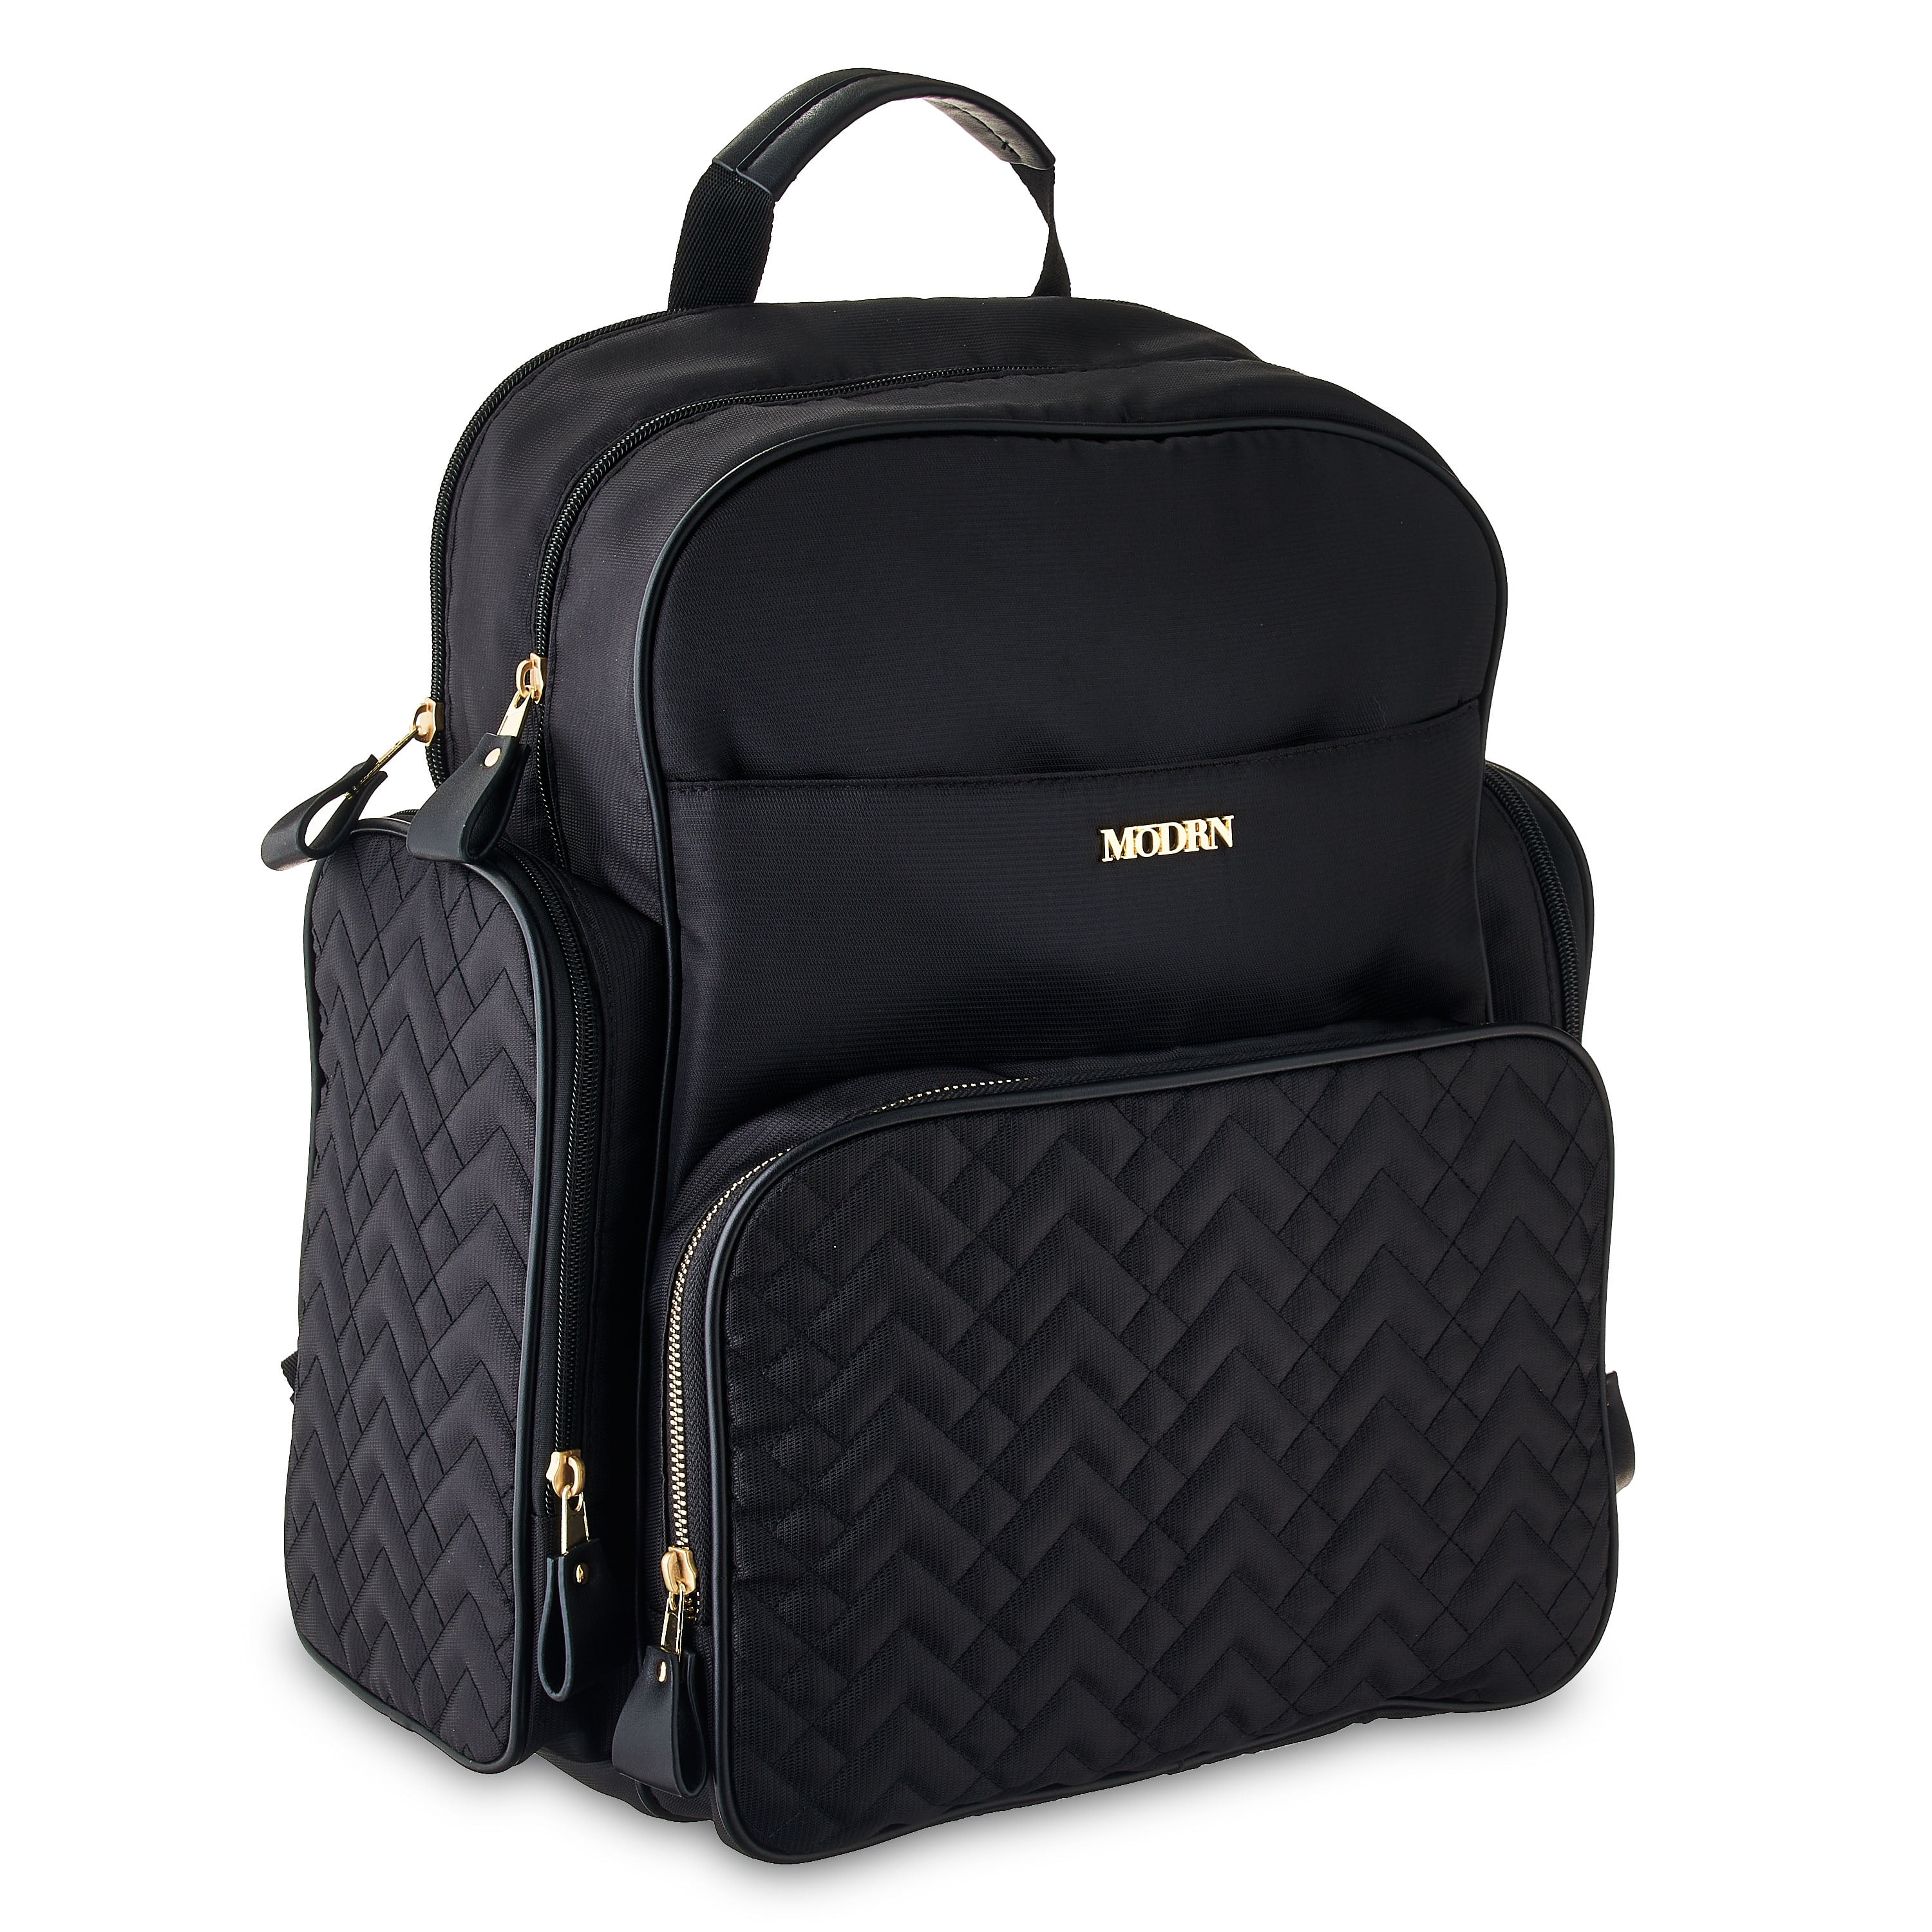 MultiSac Women's Jamie Backpack, Black, One Size : : Fashion